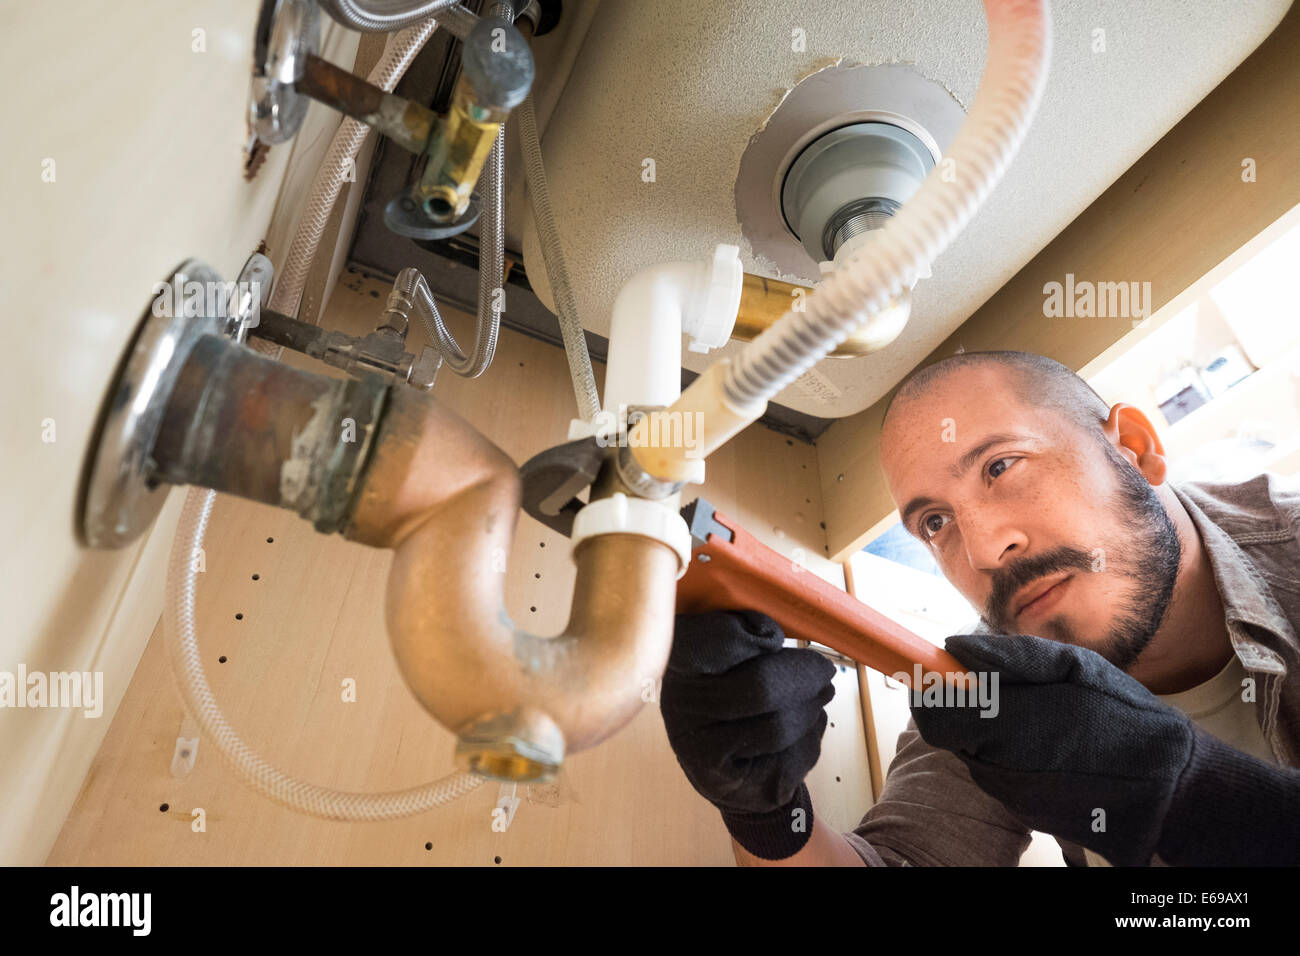 Hispanic plumber working under sink Stock Photo